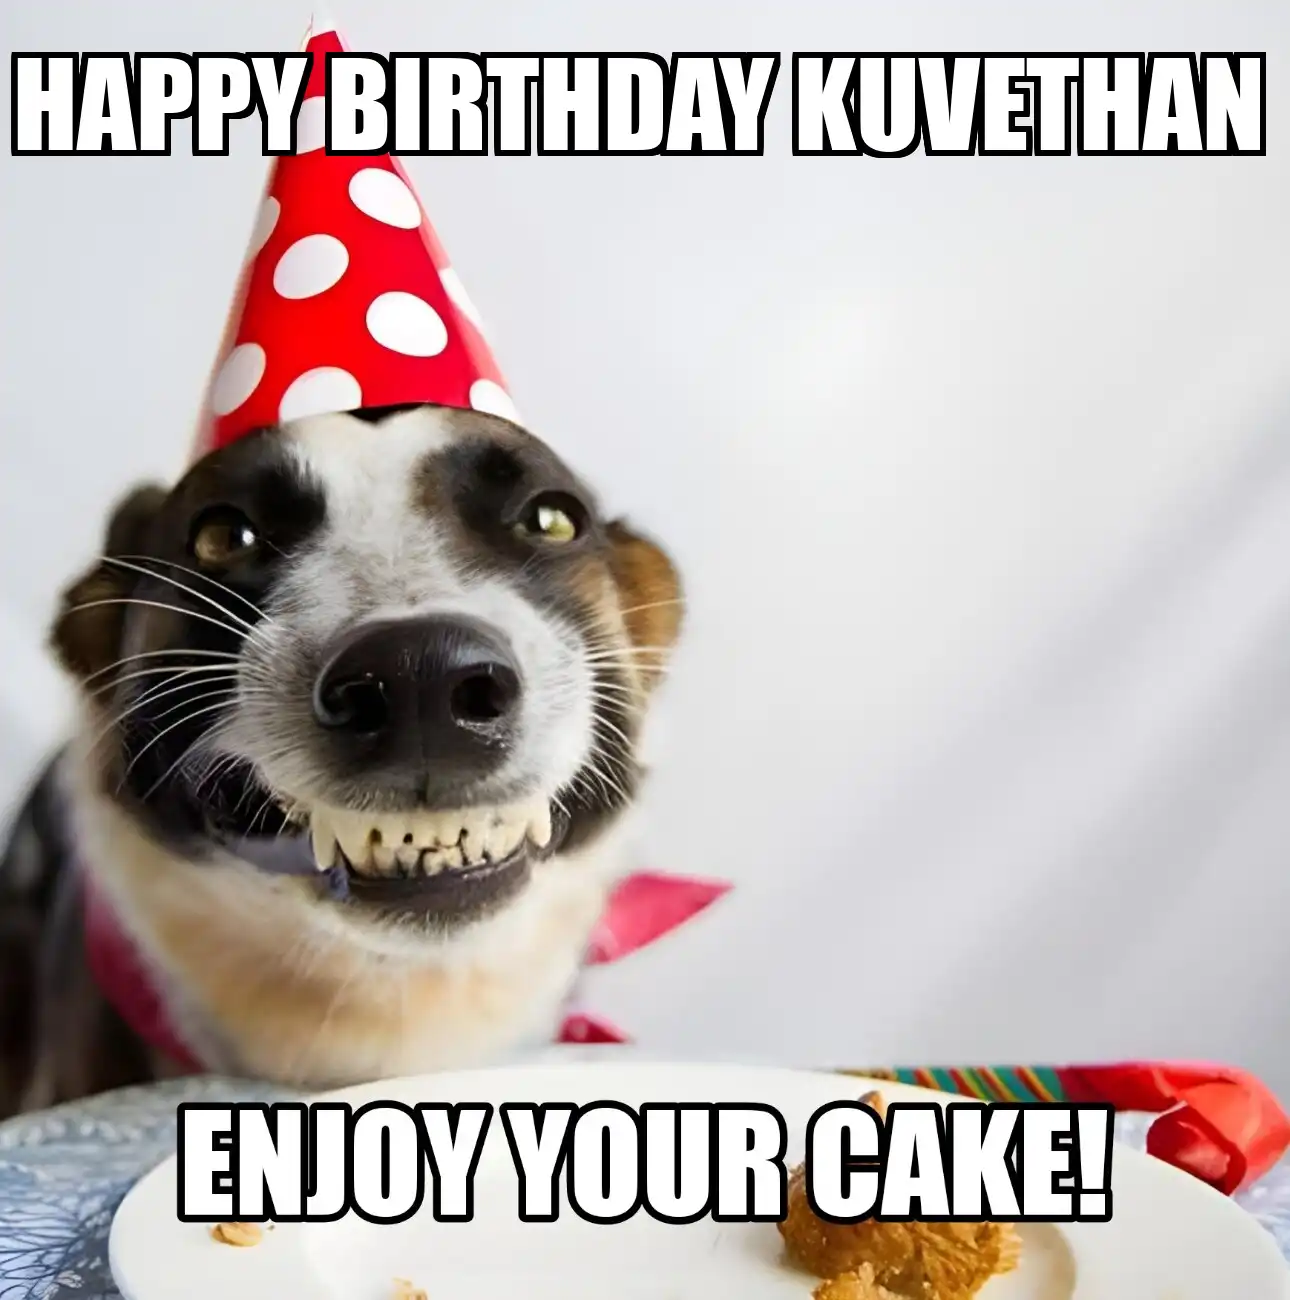 Happy Birthday Kuvethan Enjoy Your Cake Dog Meme